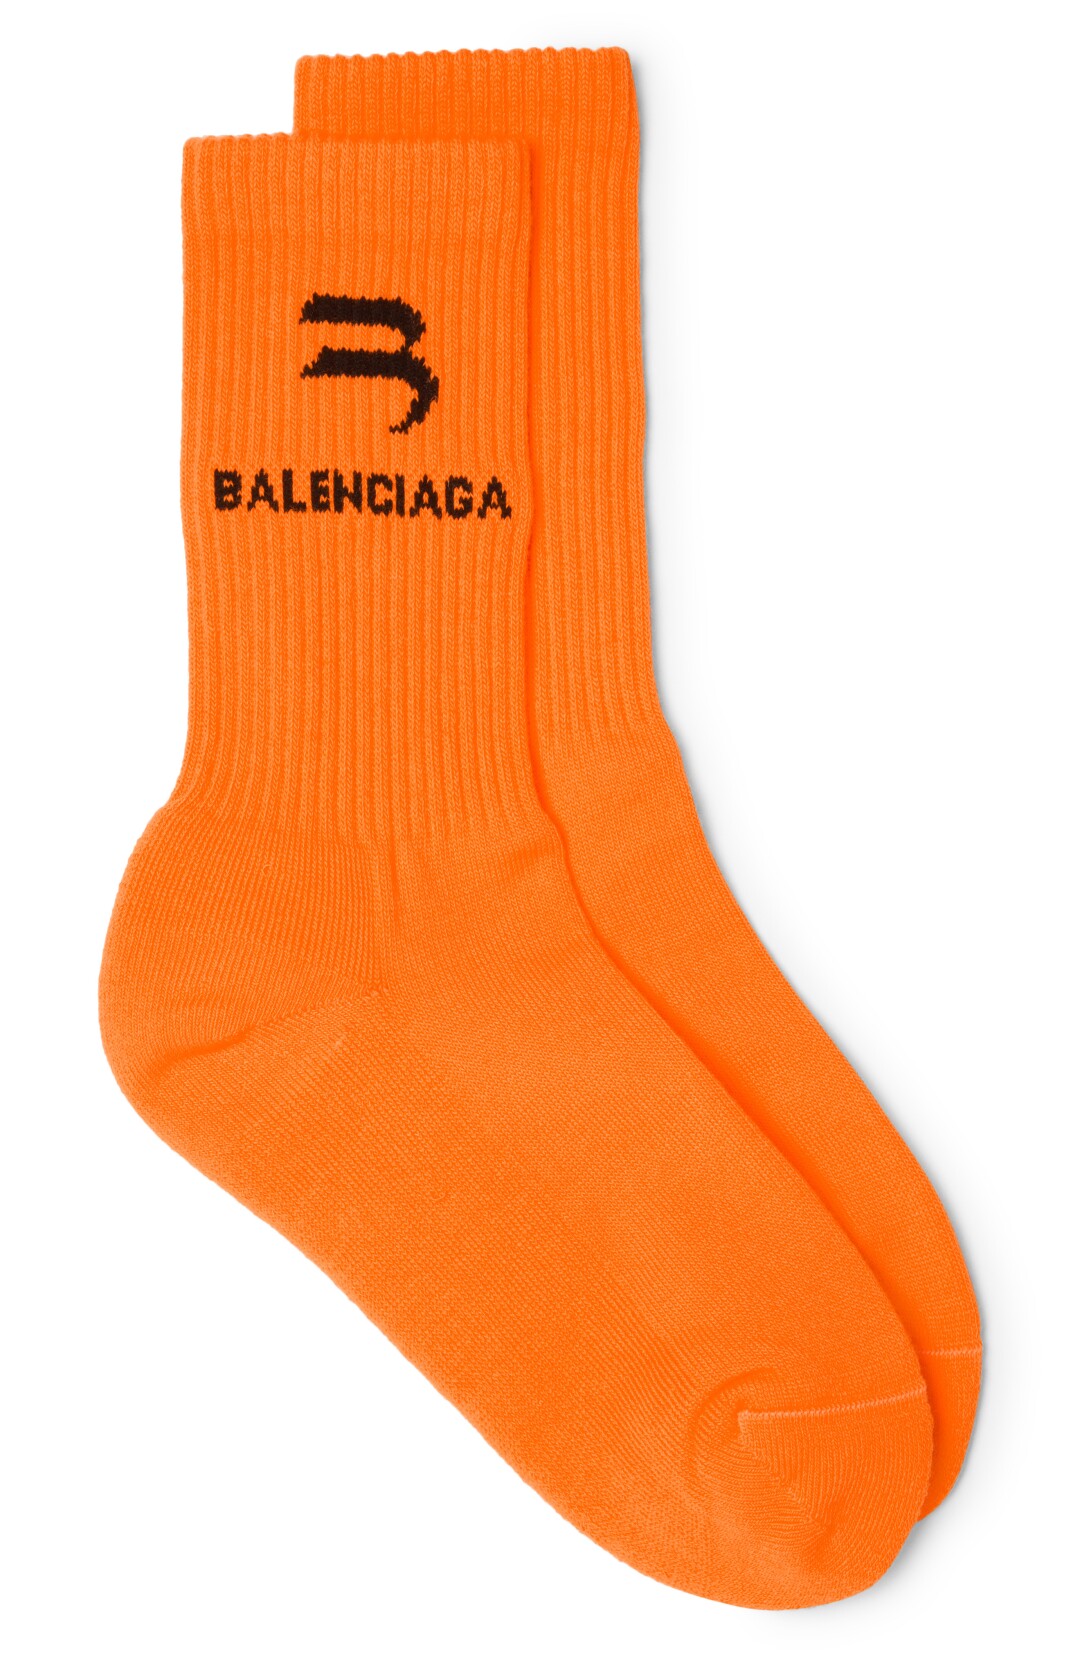 Orange socks with black Balenciaga logo